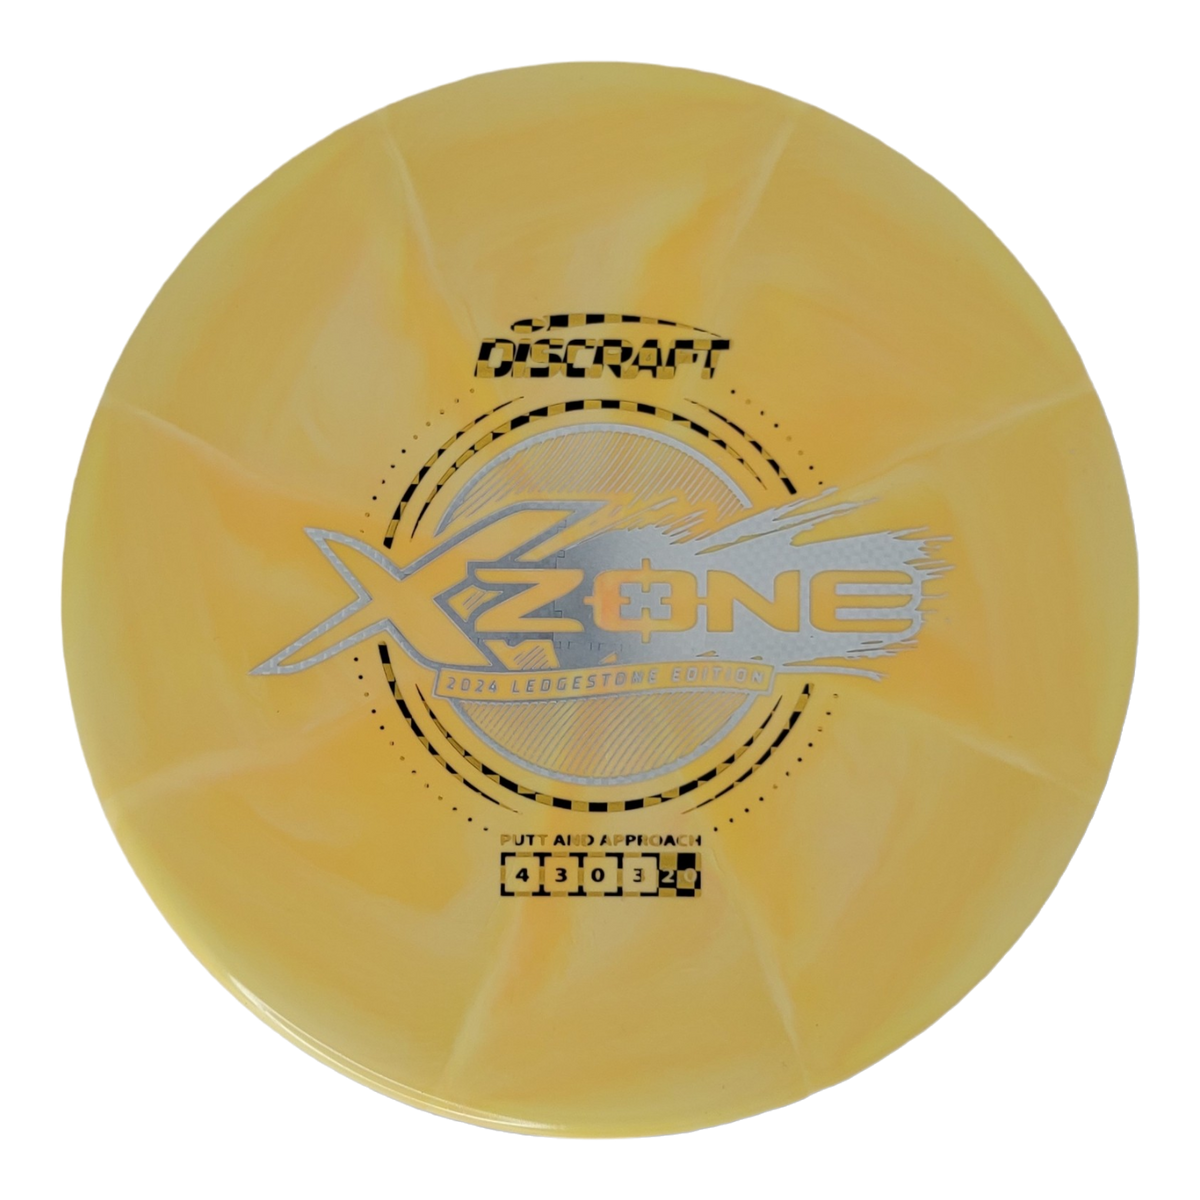 Discraft 2023 TS X Swirl Zone - Ledgestone Preseason